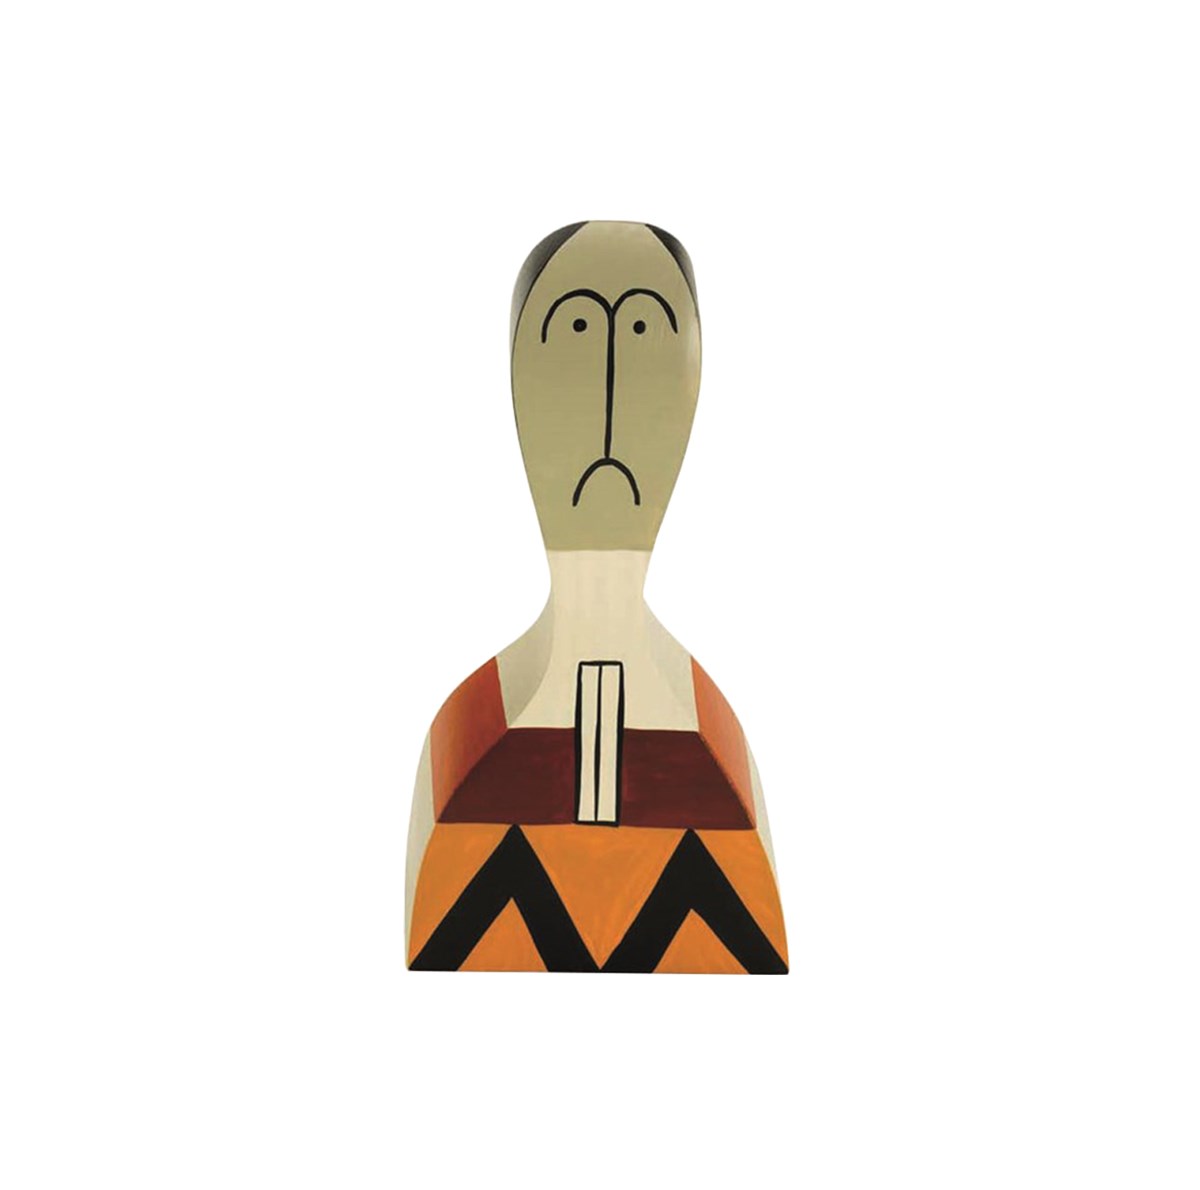 Vitra-Alexander-Girard-Wooden-Doll-No.17-Matisse-1